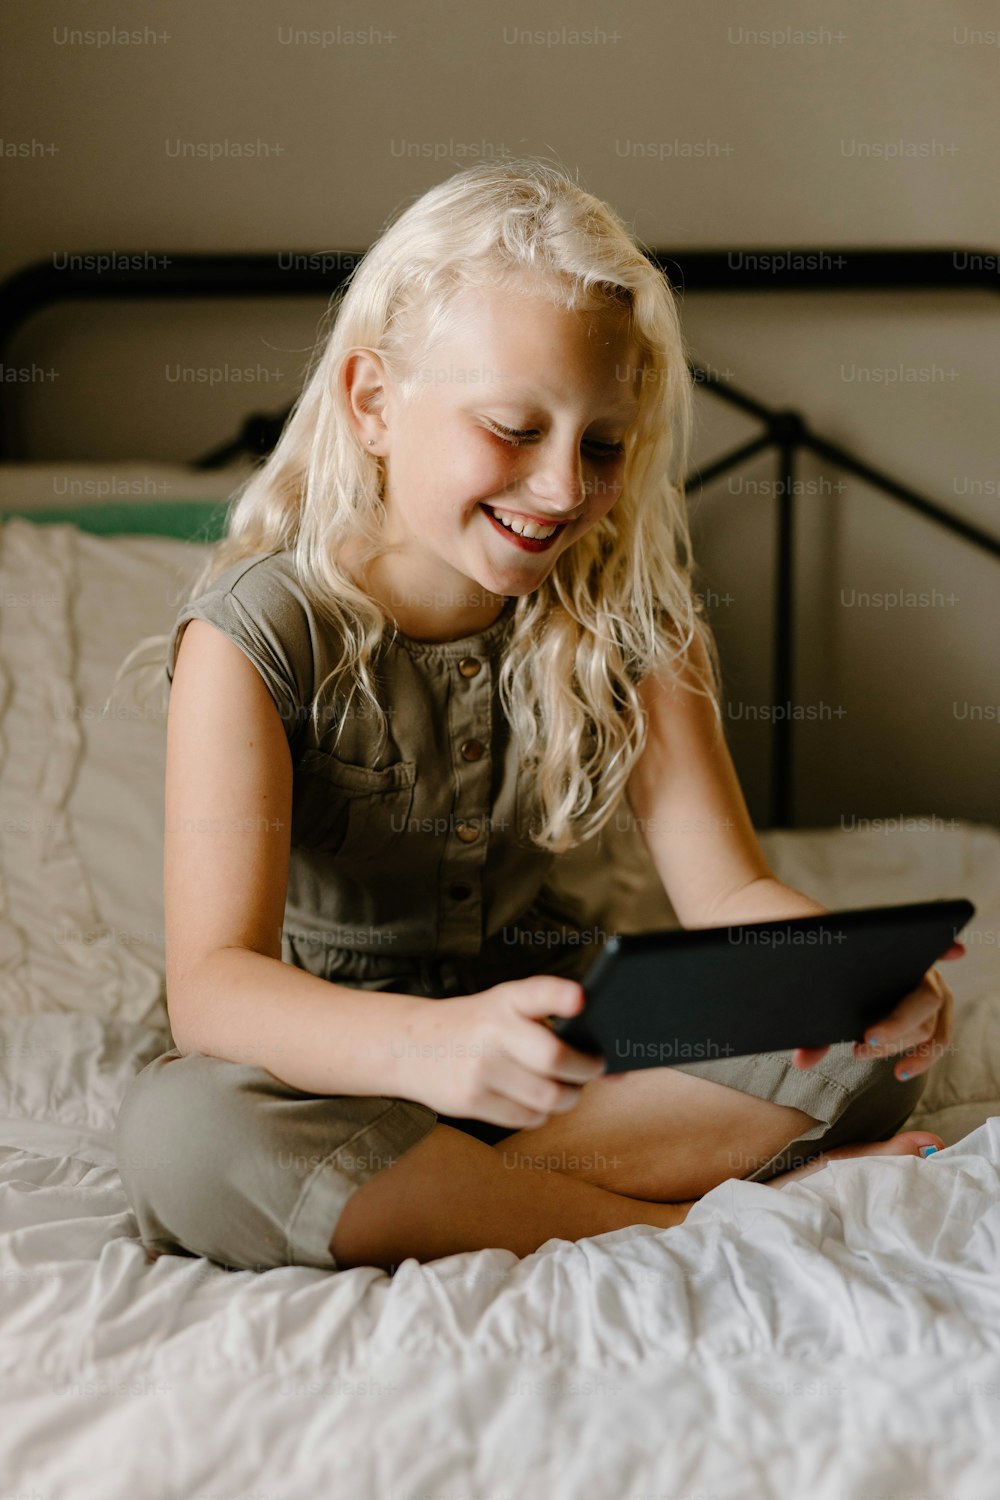 Una bambina seduta su un letto che gioca con un tablet